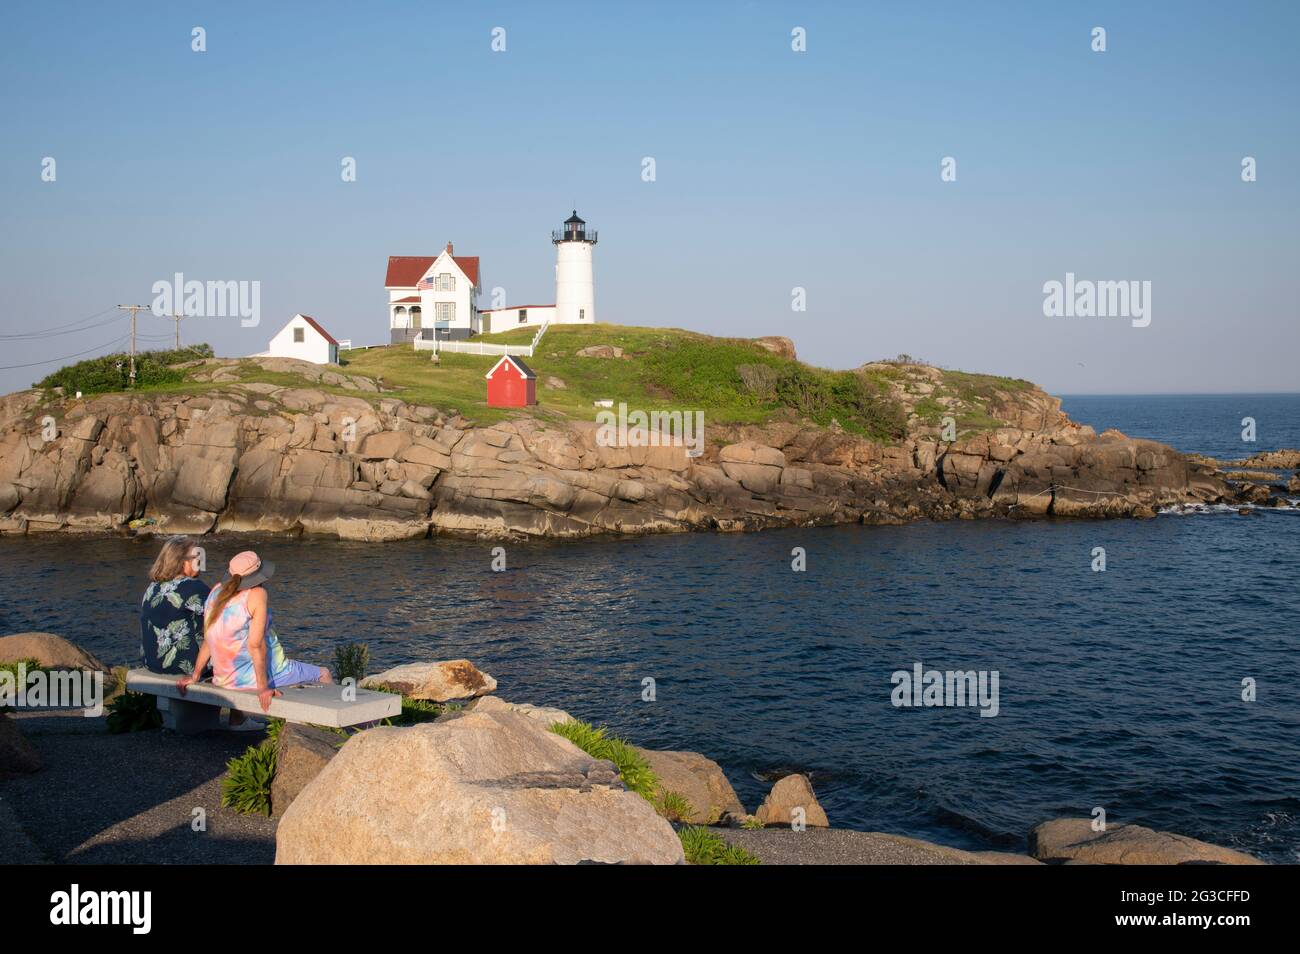 Two women enjoying an evening at Nubble Light in Cape Neddick (York), Maine, USA Stock Photo